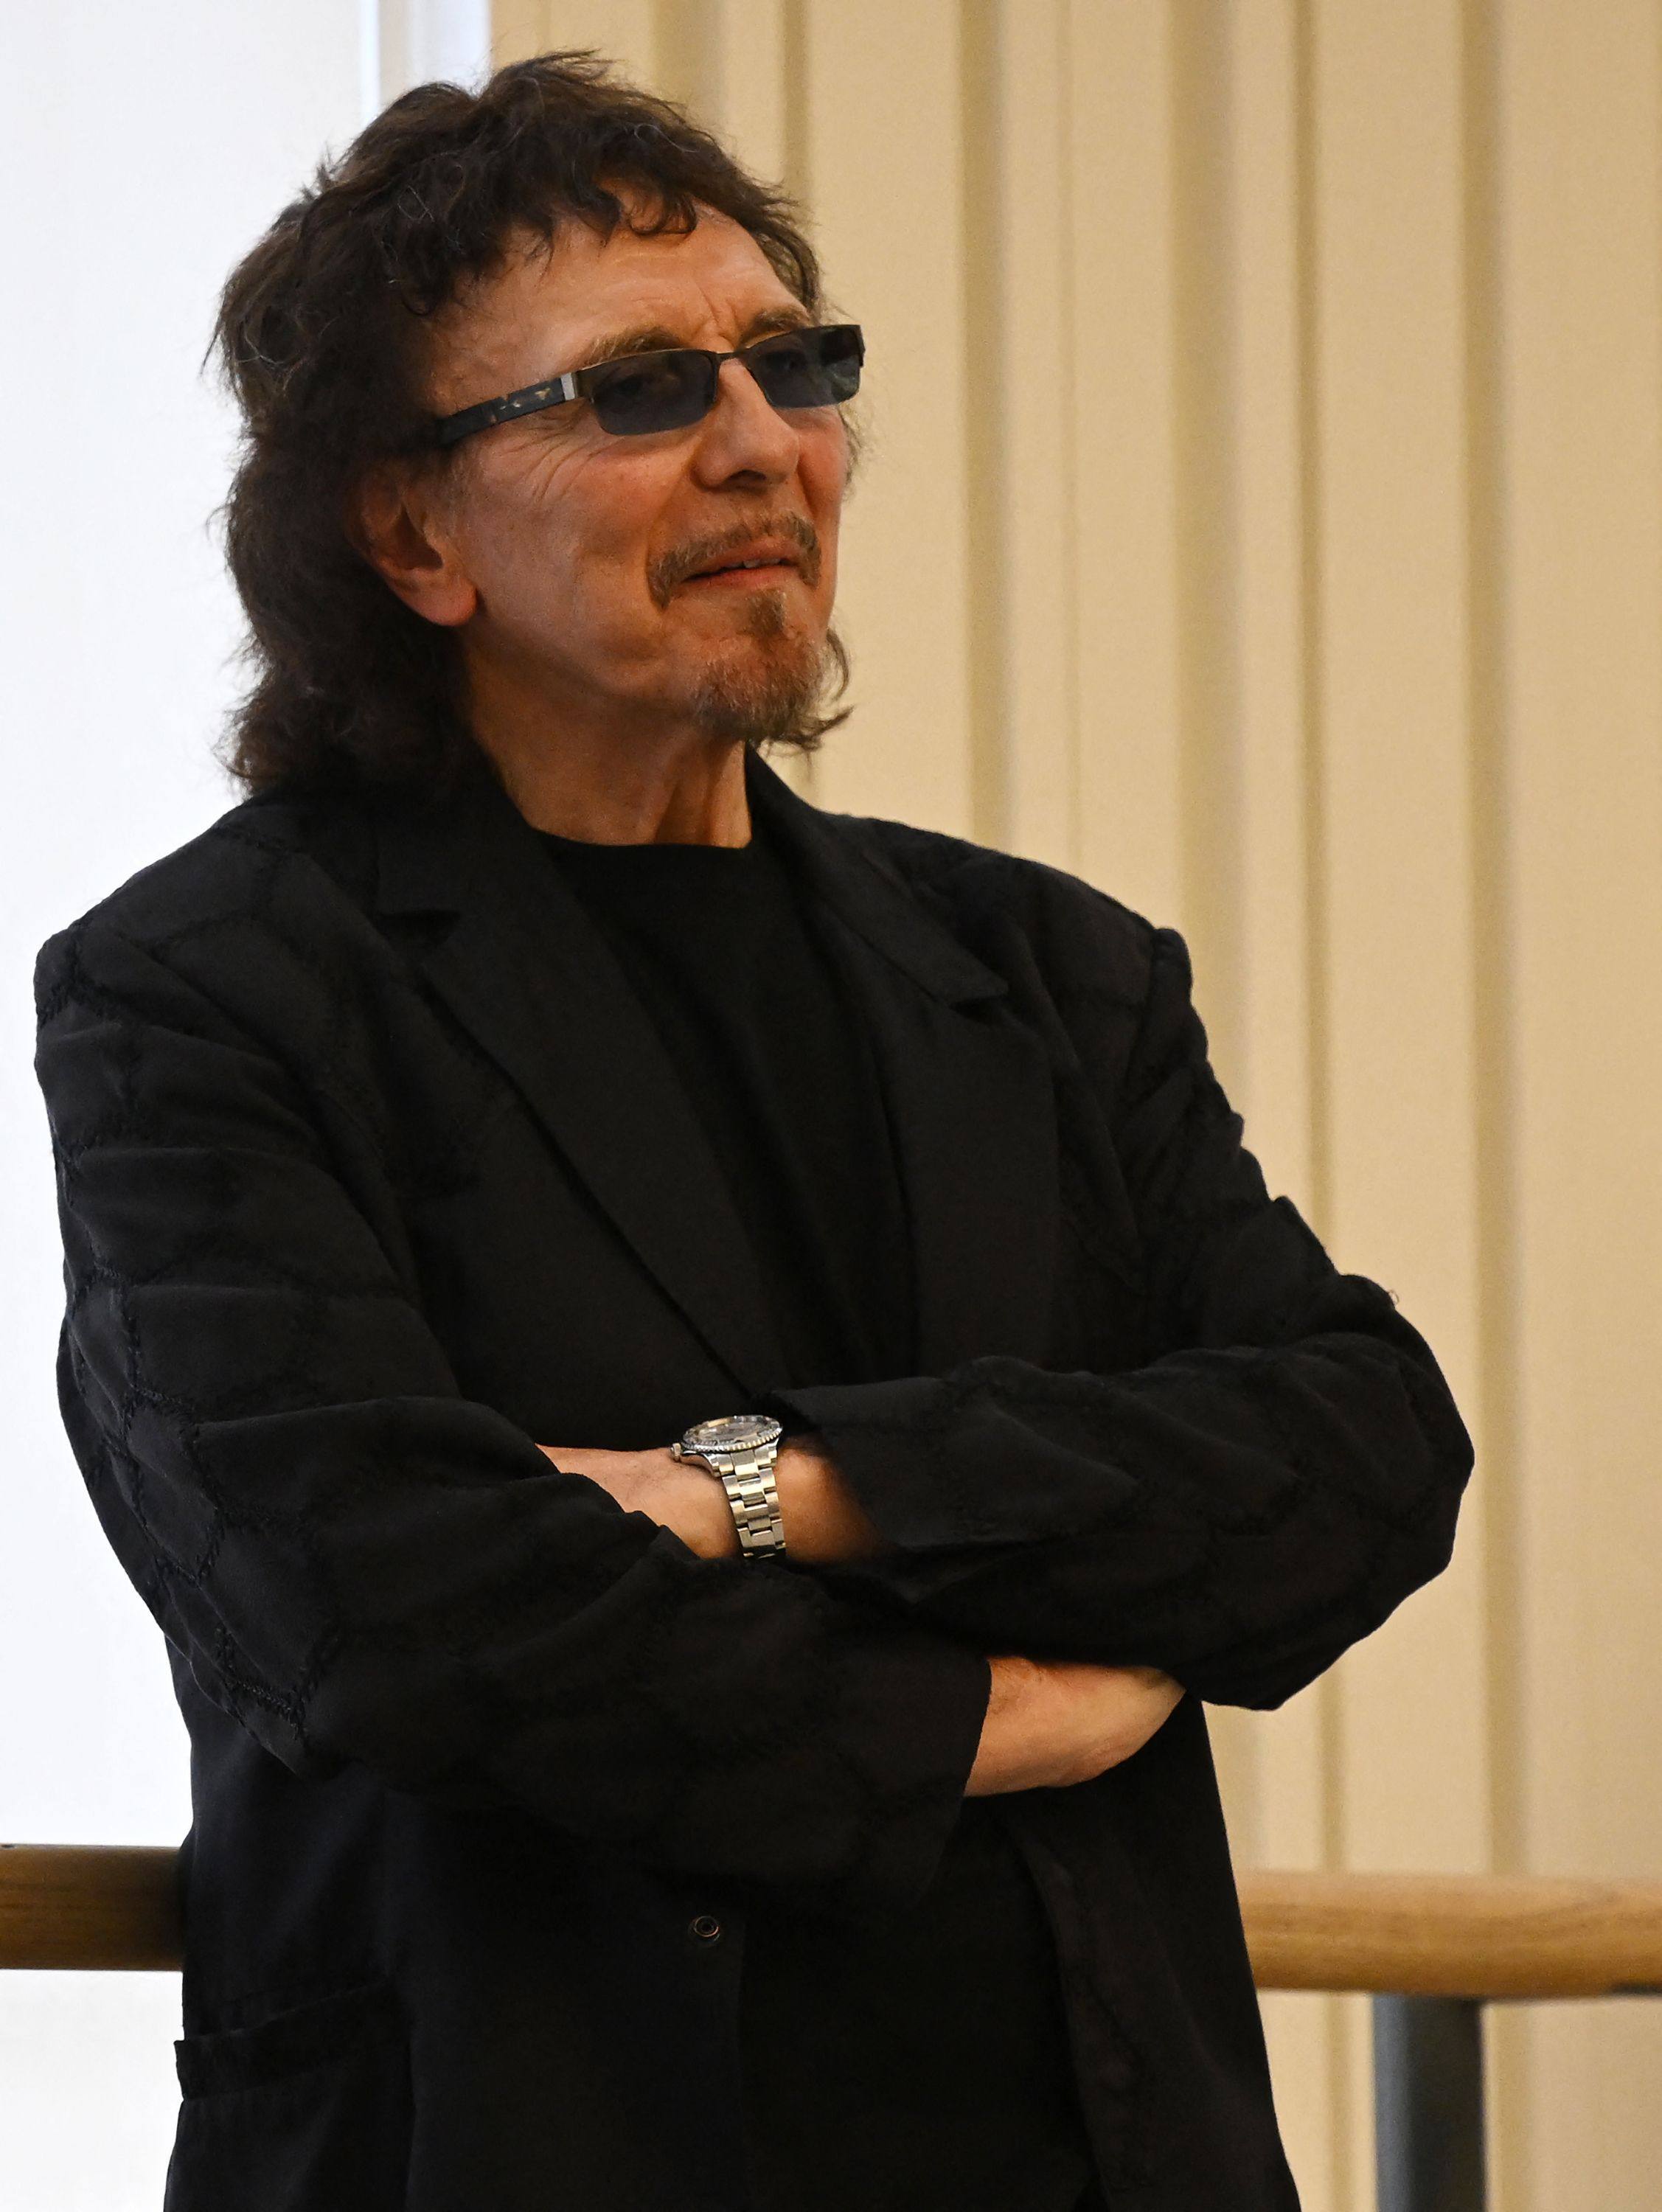 Black Sabbath guitarist Tony Iommi watches dancers rehearsing for “Black Sabbath – the Ballet”. Photo: AFP